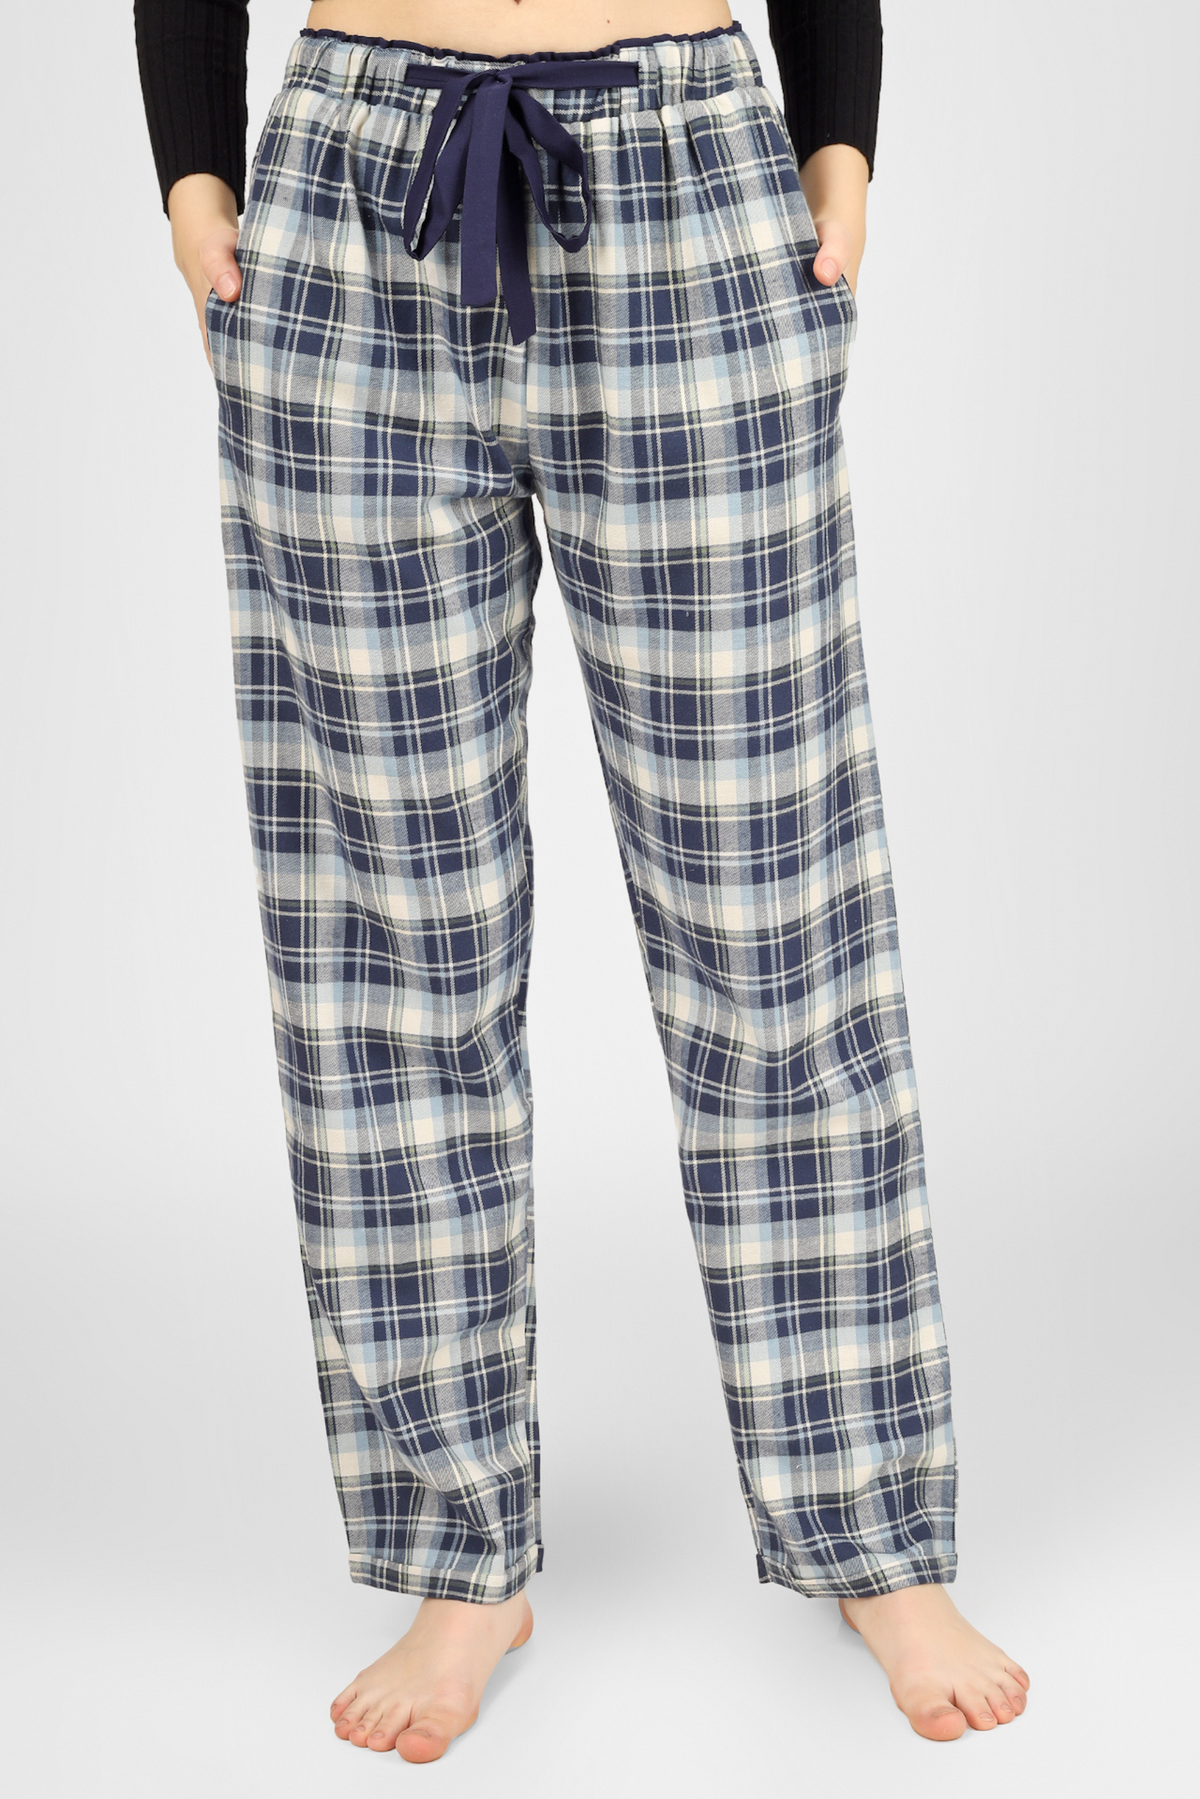 Navy Dusky Delight Flannel Pyjama For Women 3